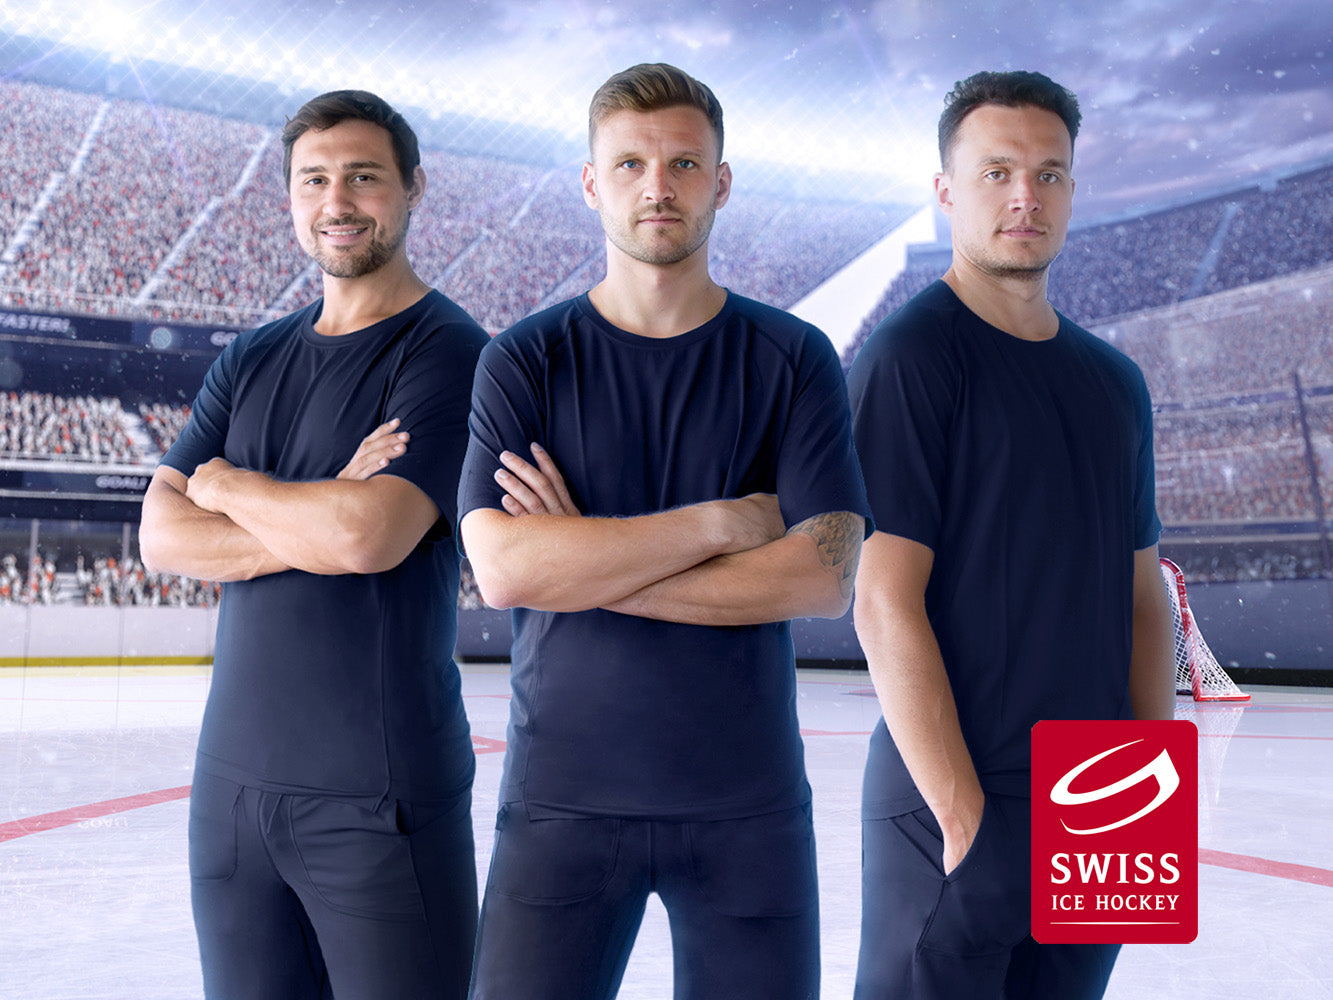 The Swiss National Ice Hockey Team